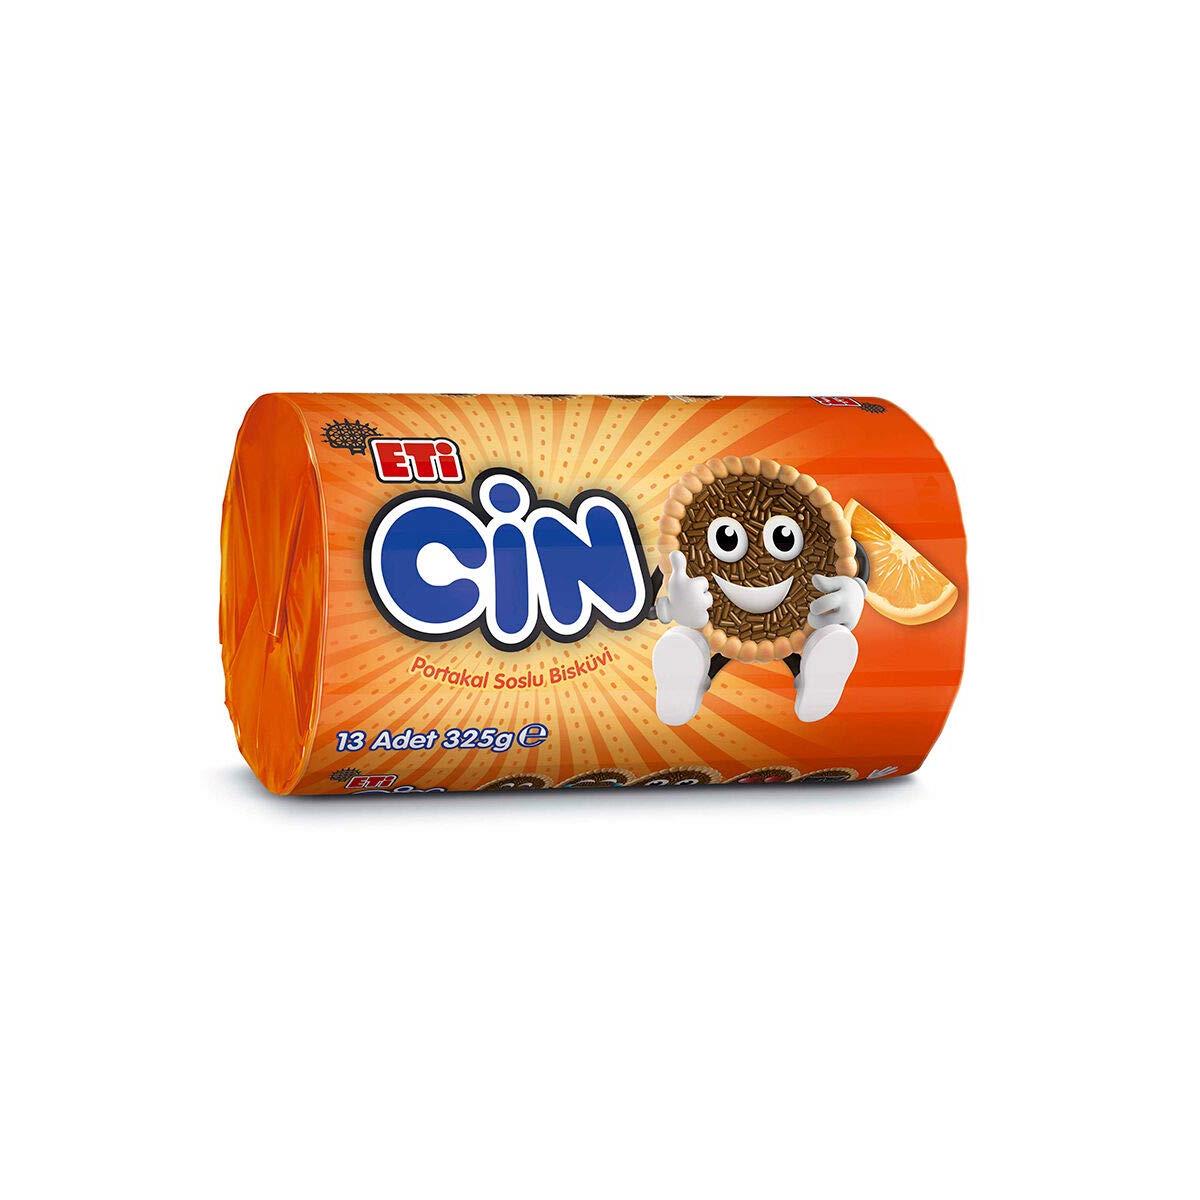 Orange Tart – 11.45 oz (325g) Eti Cin Orange Biscuit - Pack of 6